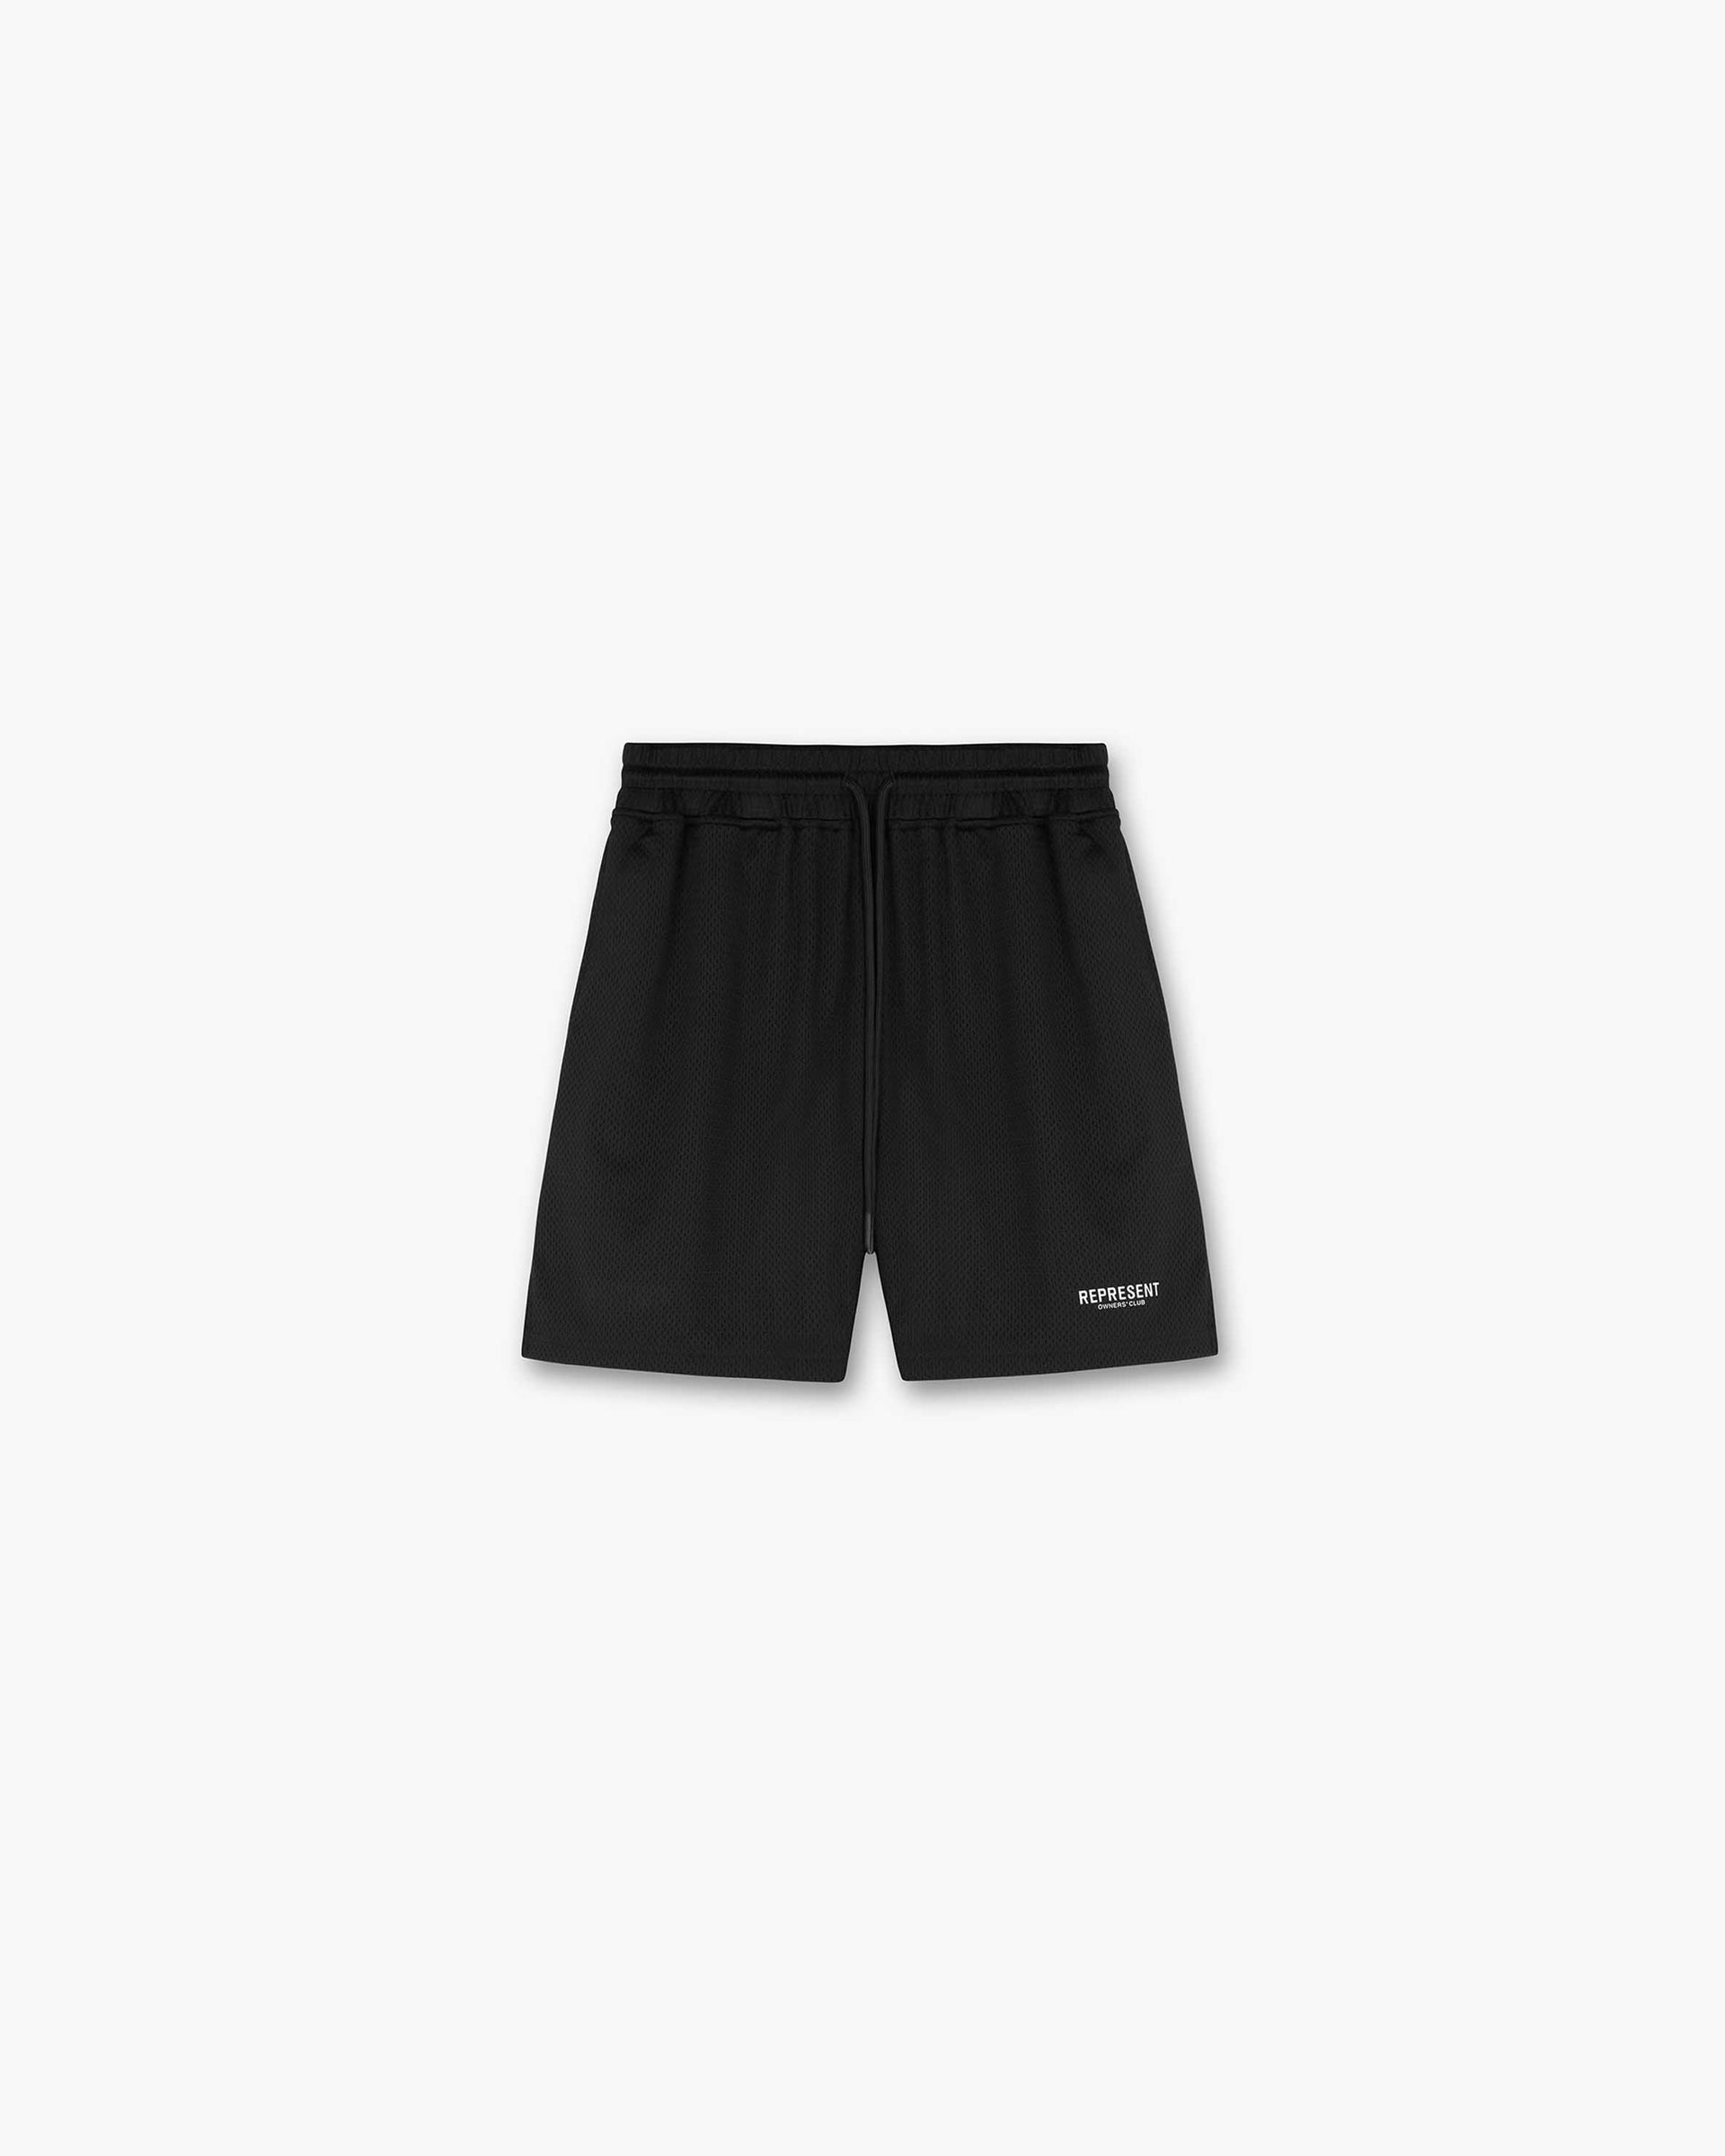 Represent Owners Club Mesh Shorts | Black Shorts Owners Club | Represent Clo